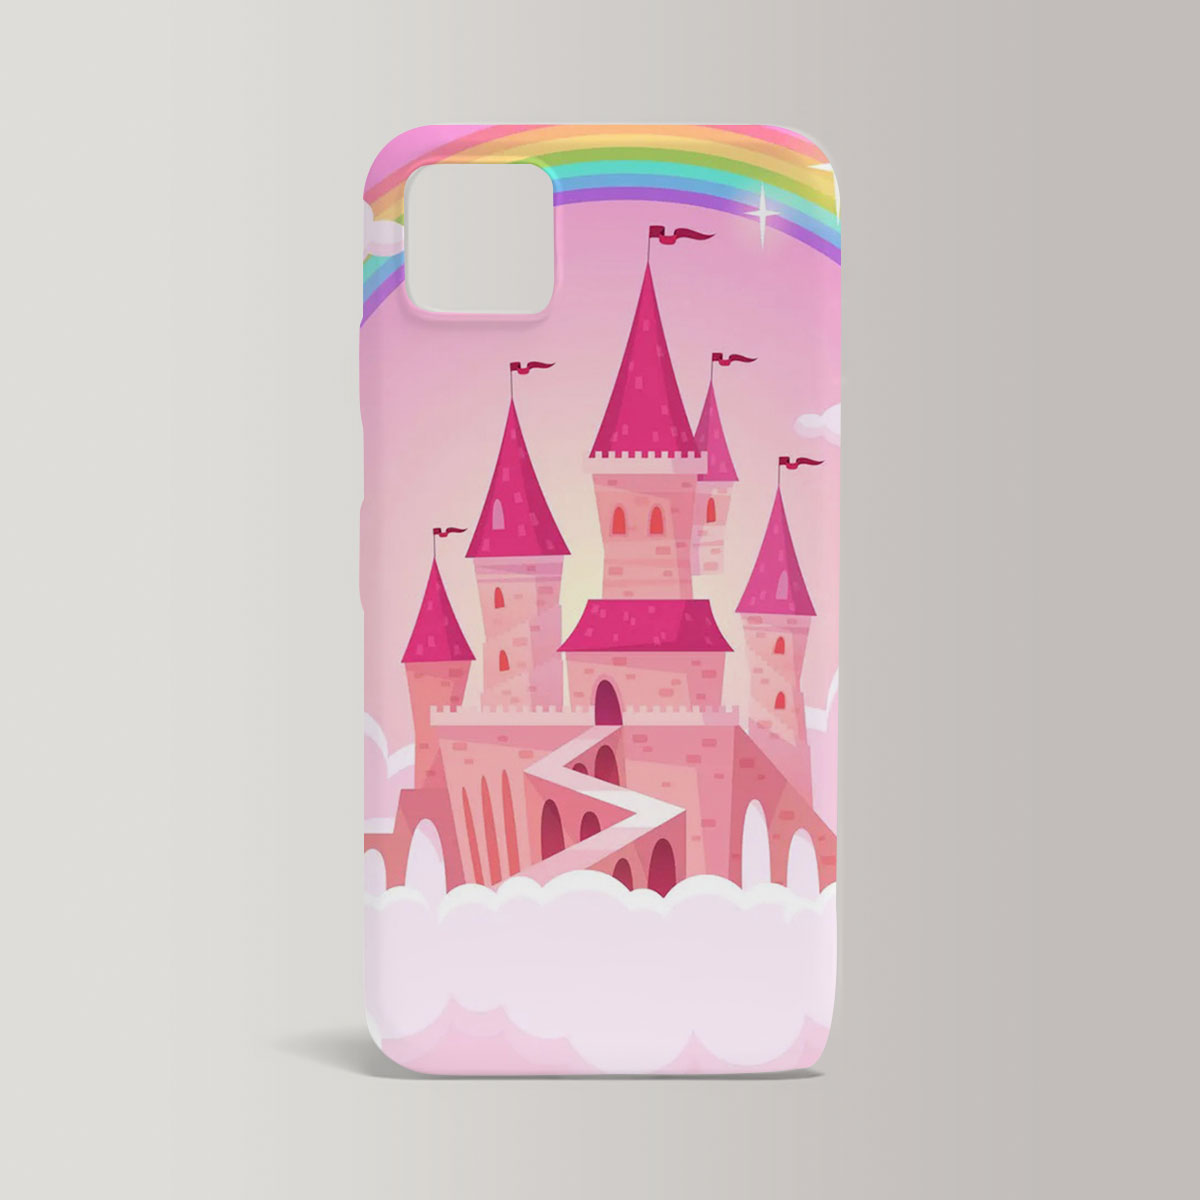 Magic Pink Rainbow Castel Iphone Case